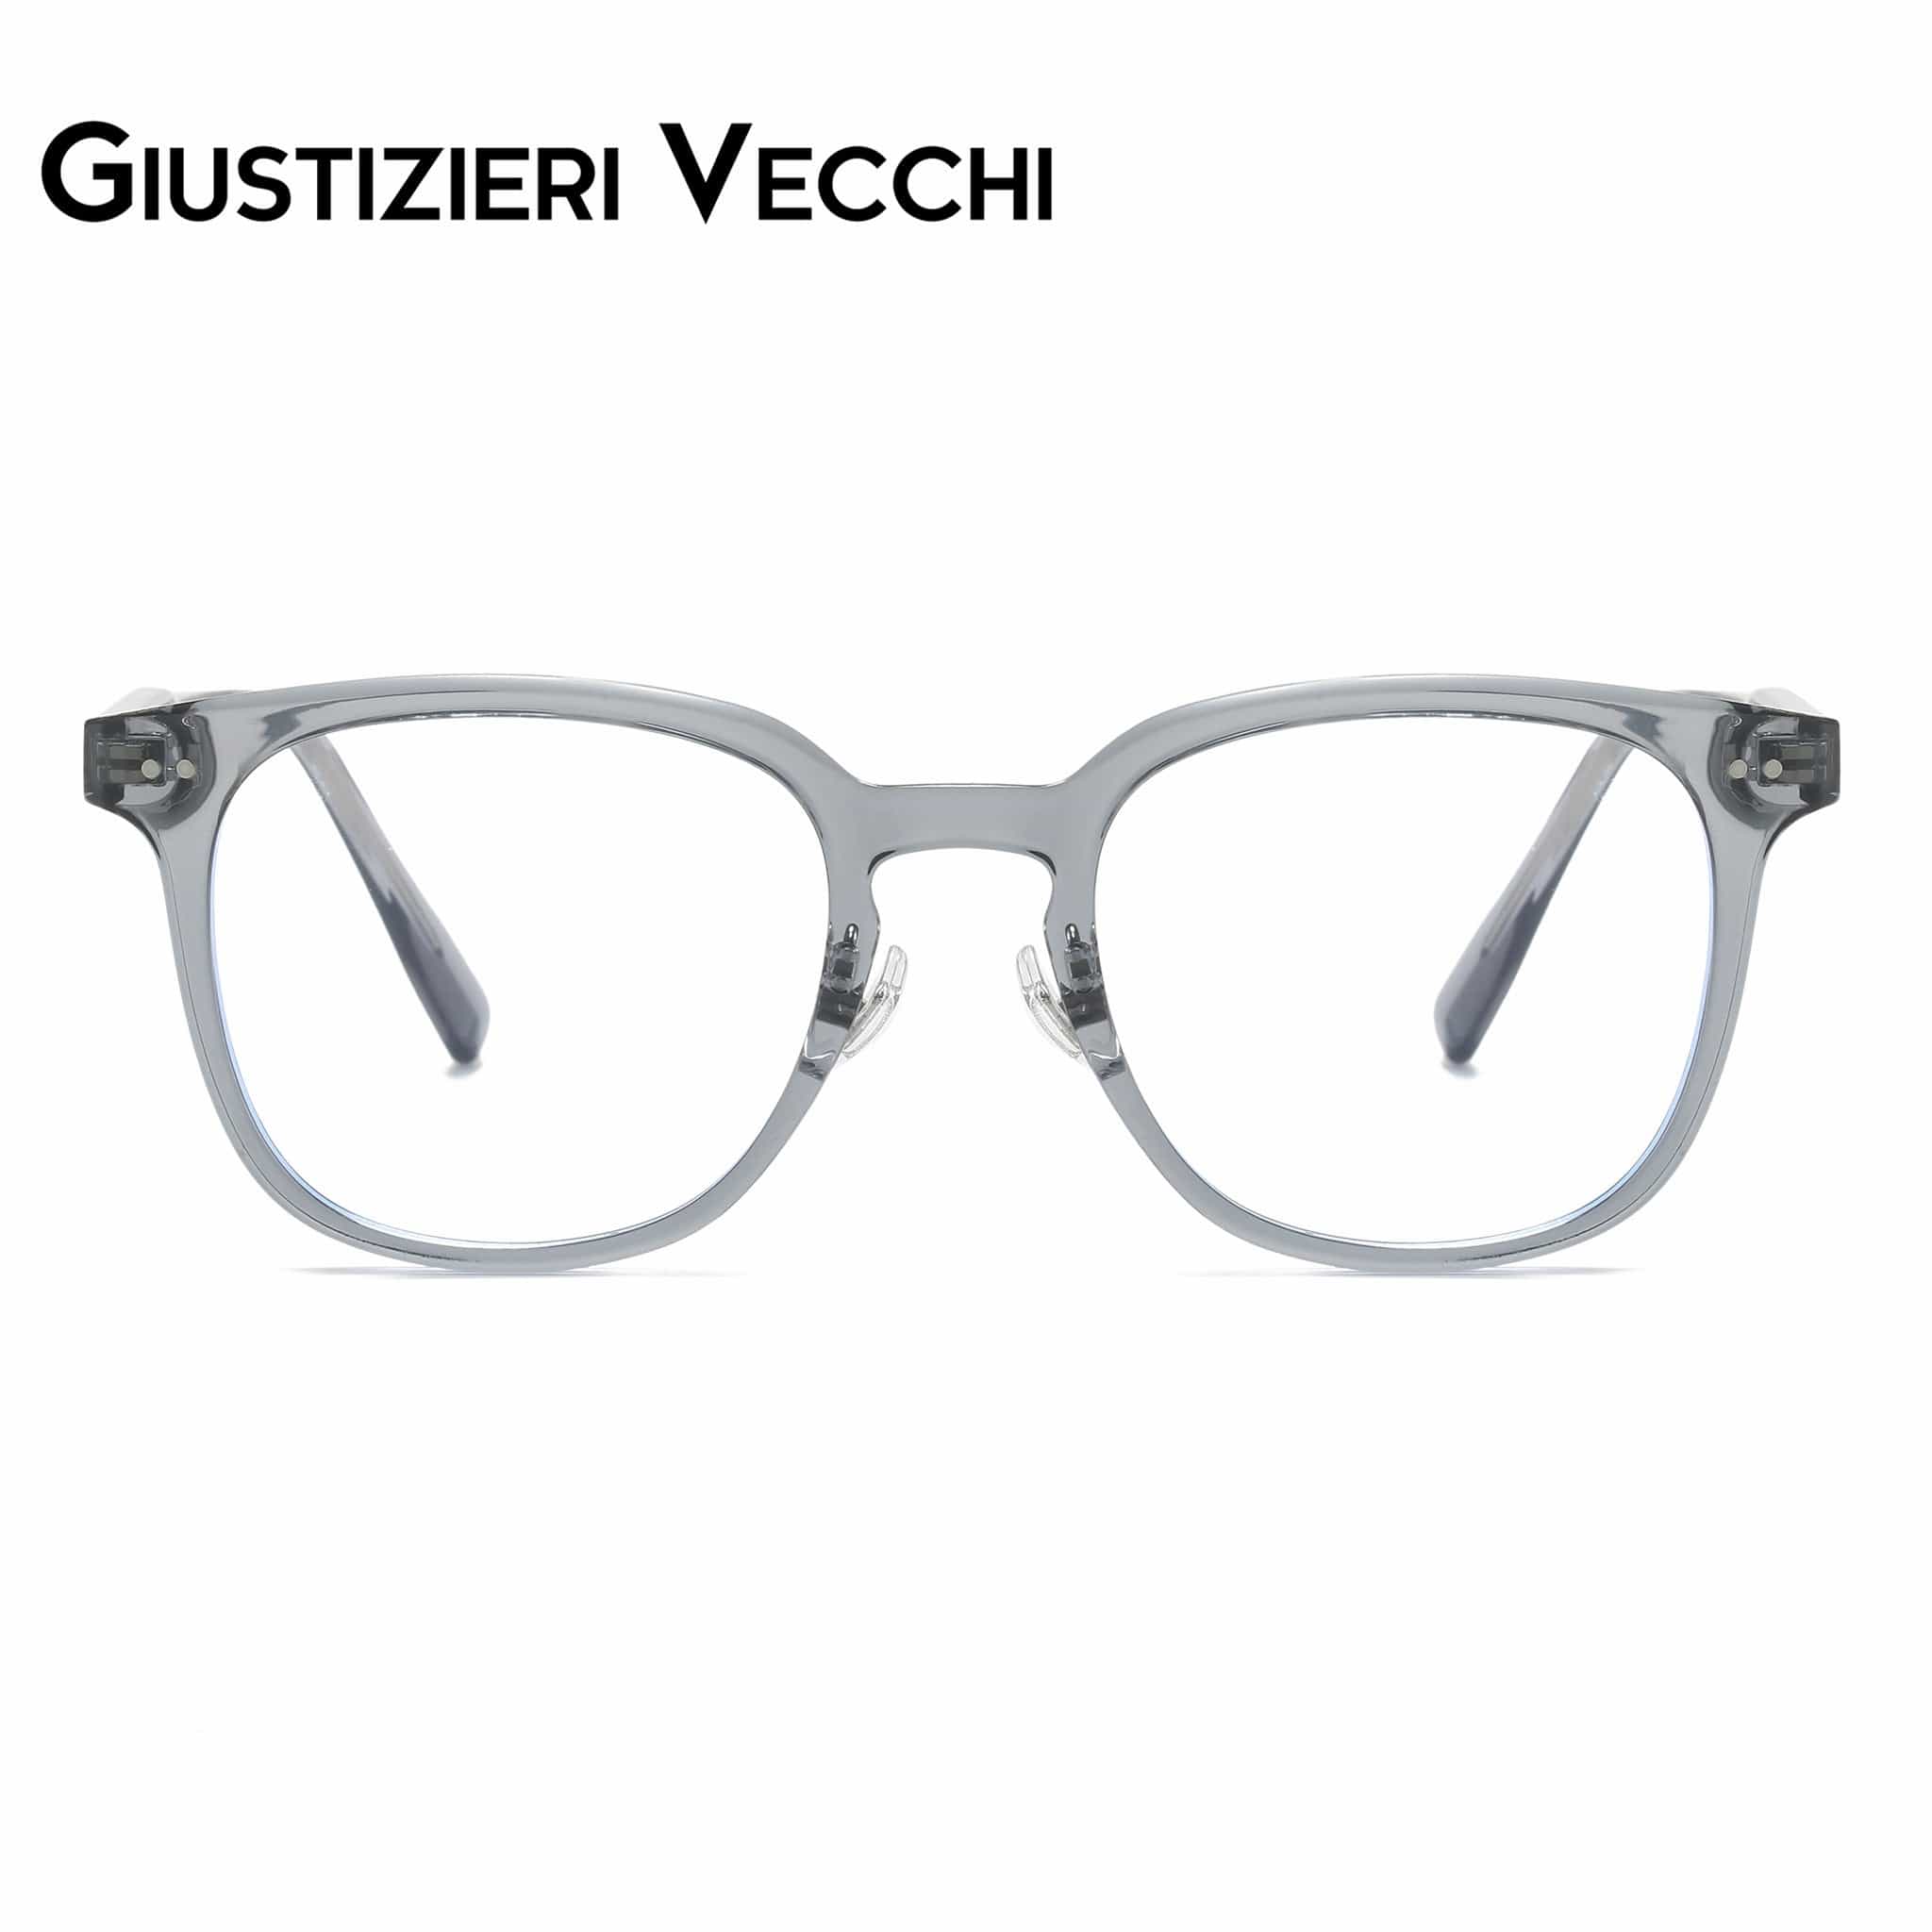 GIUSTIZIERI VECCHI Eyeglasses Medium / Sea Glass Grey RomaVista Duo